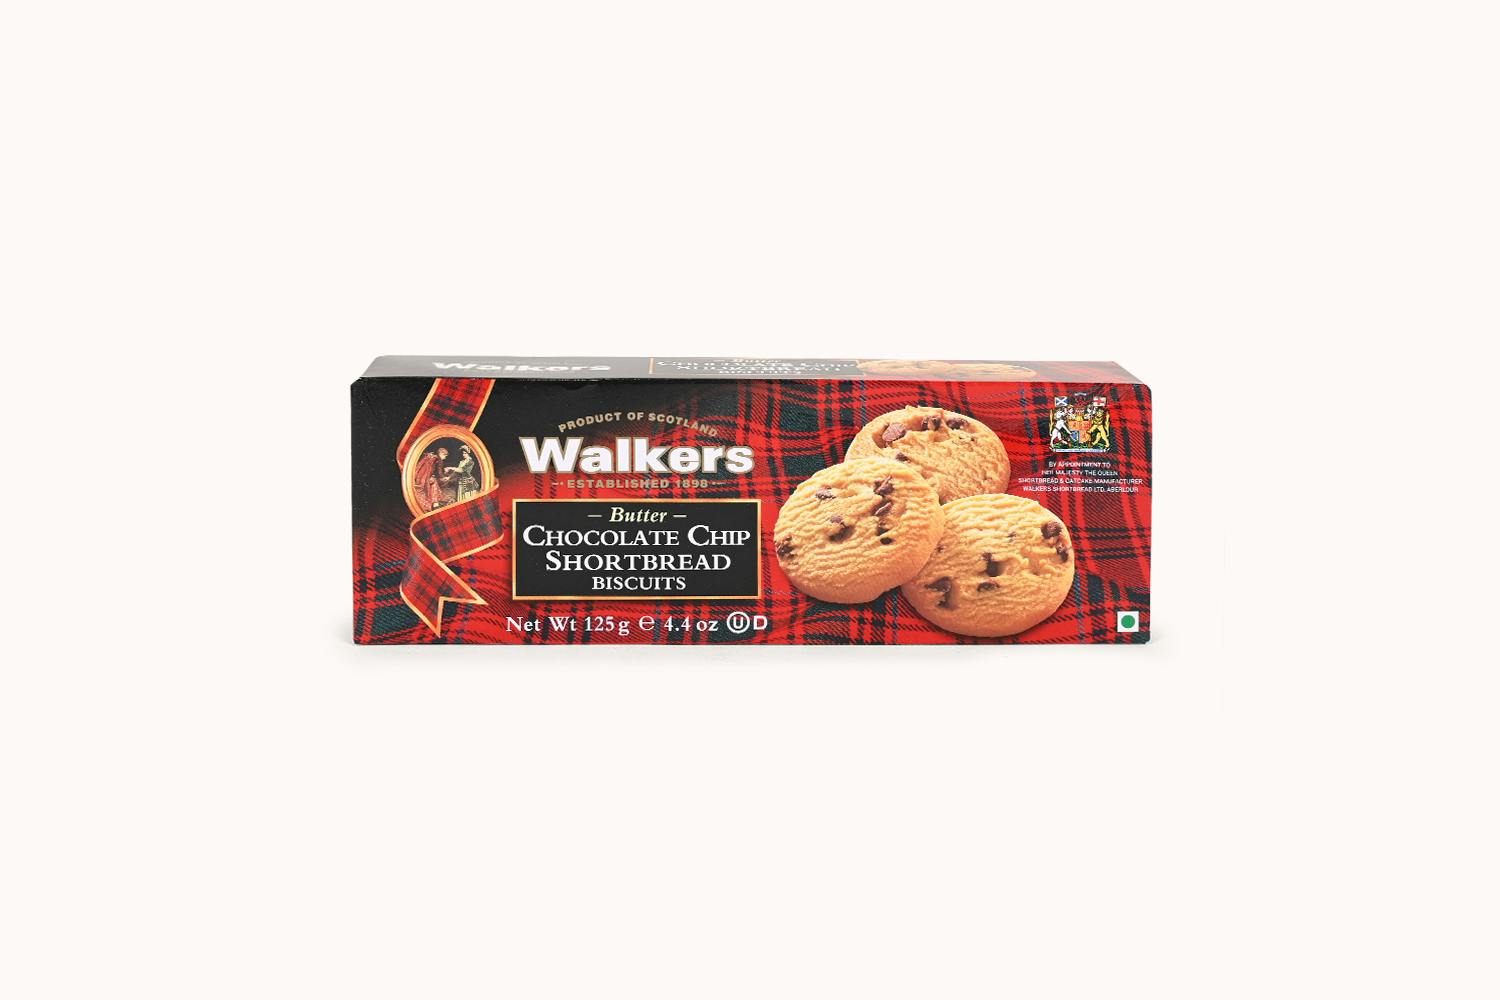 Walkers Belgian Chocolate Chunk Biscuits